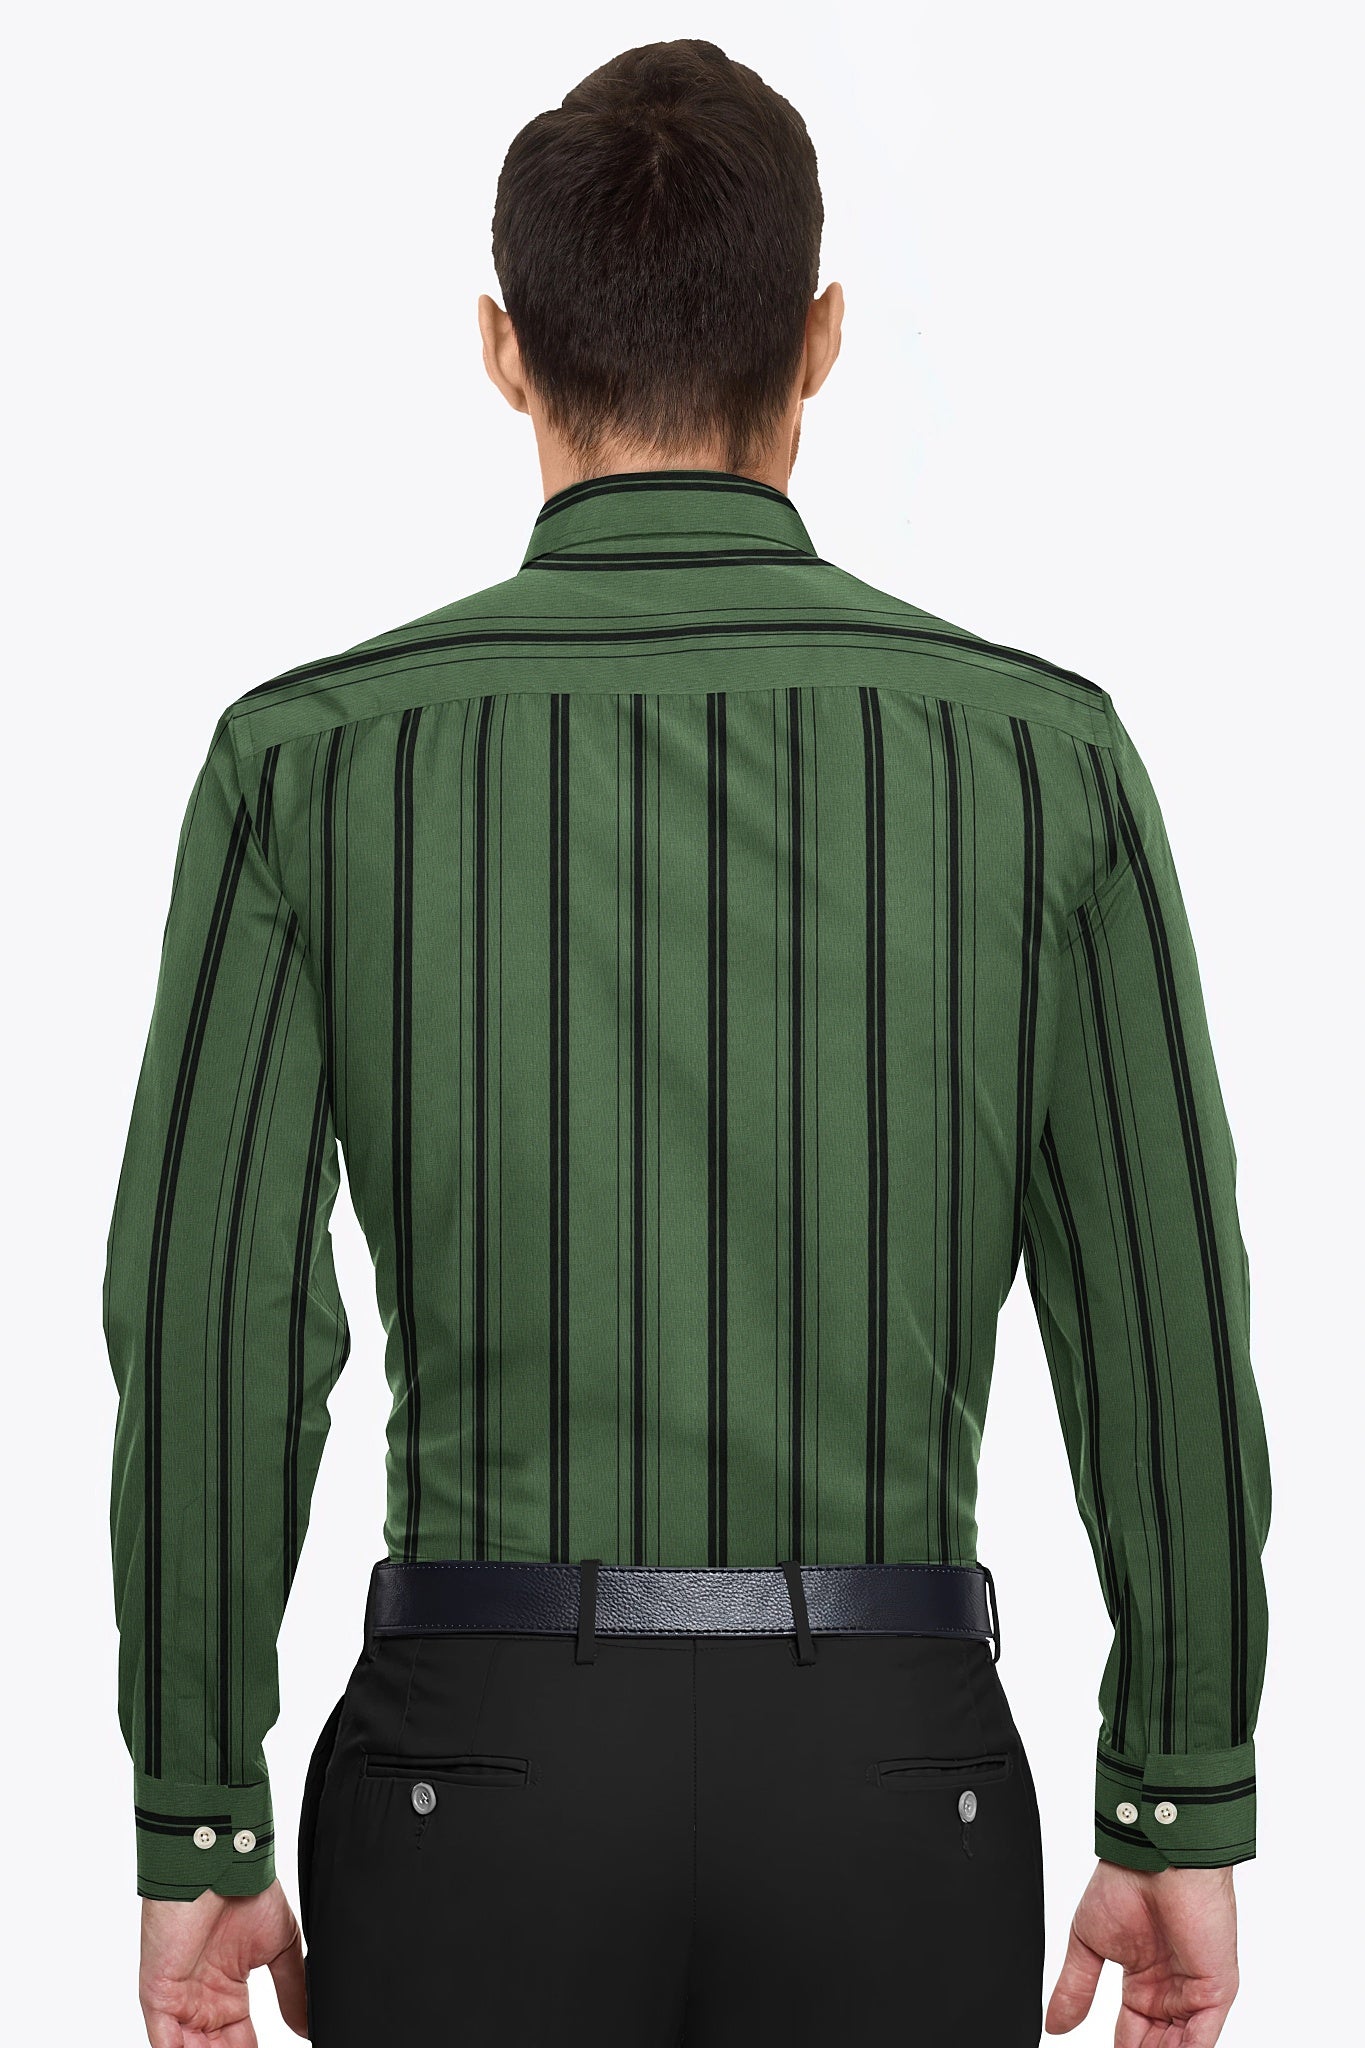 Comfrey Green and Black Stripes Cotton Shirt